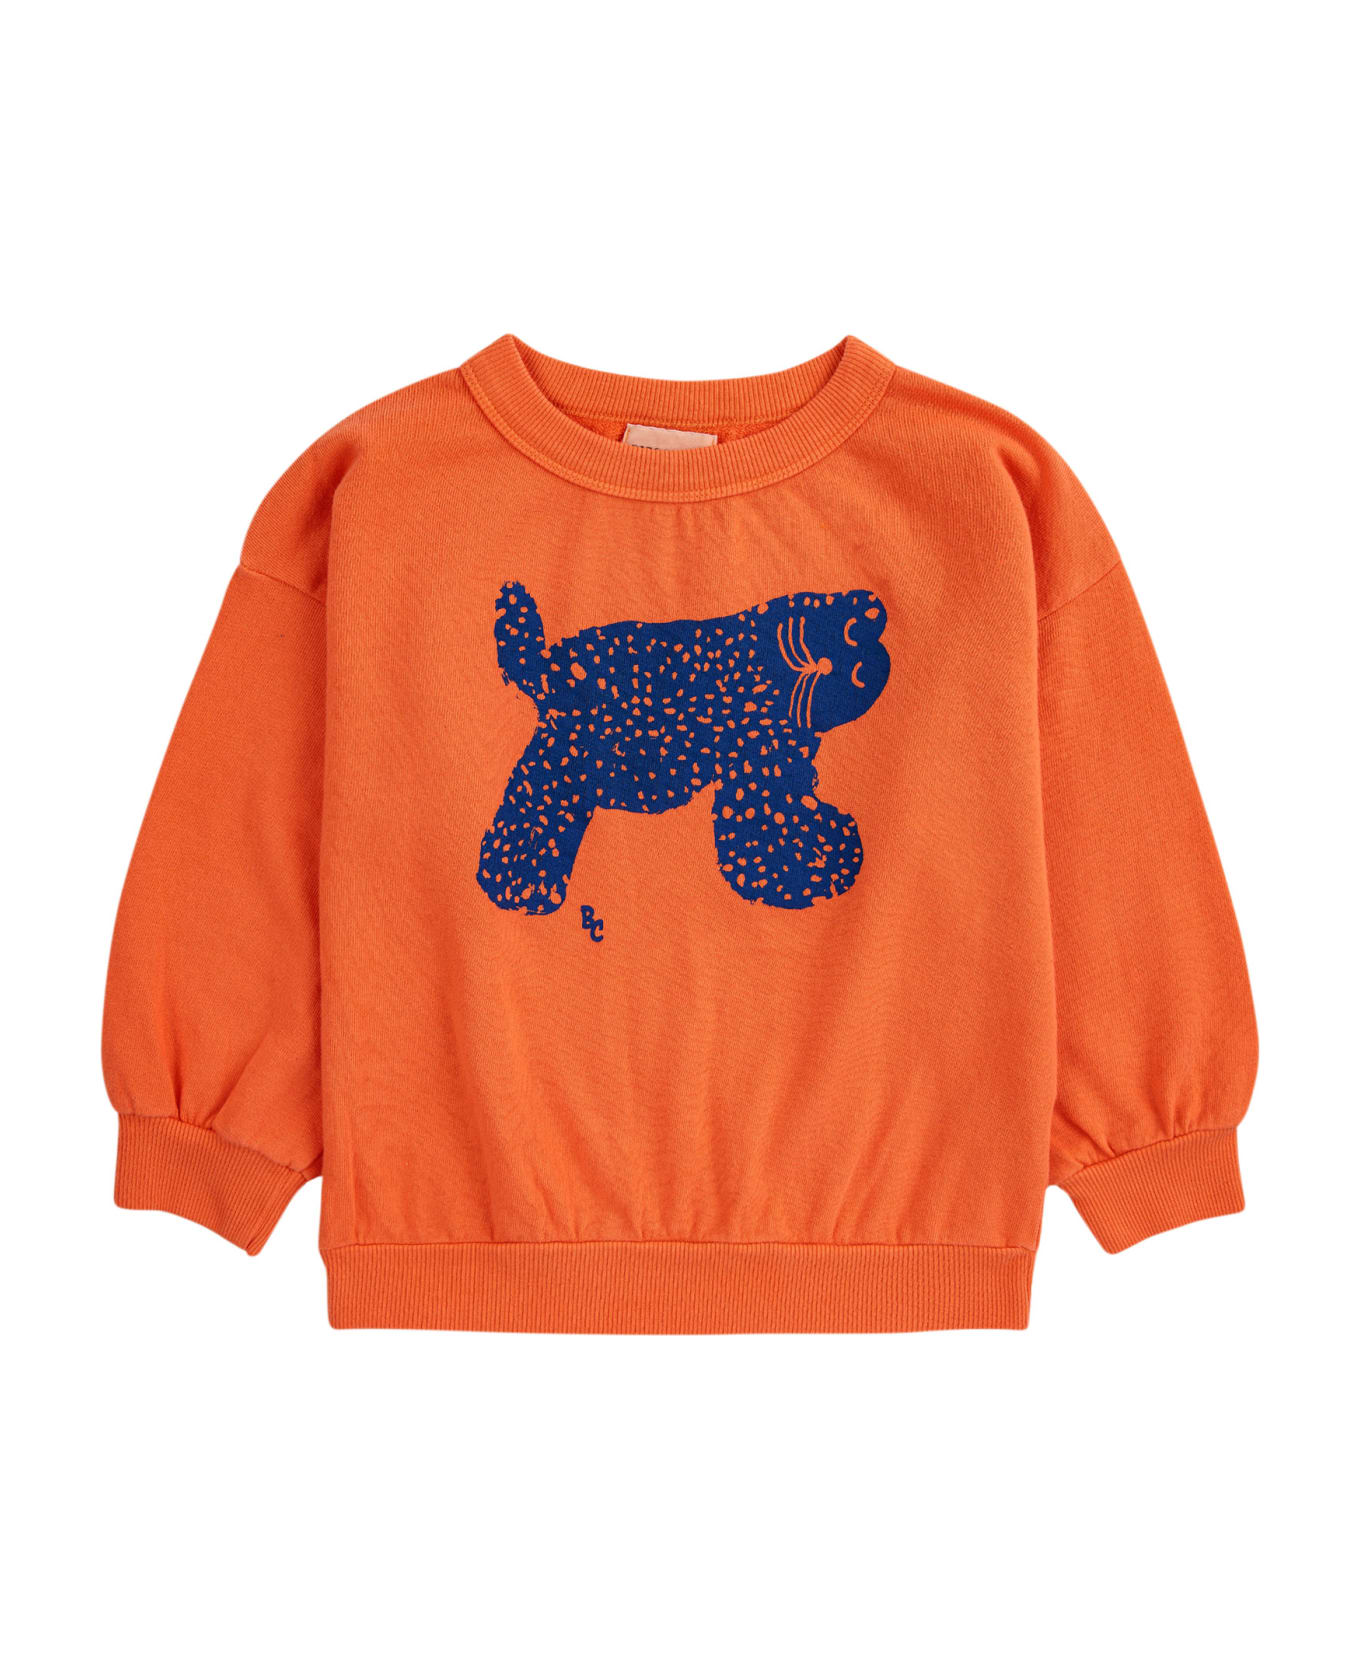 Bobo Choses Orange Sweatshirt For Kids With Cheetah - Orange